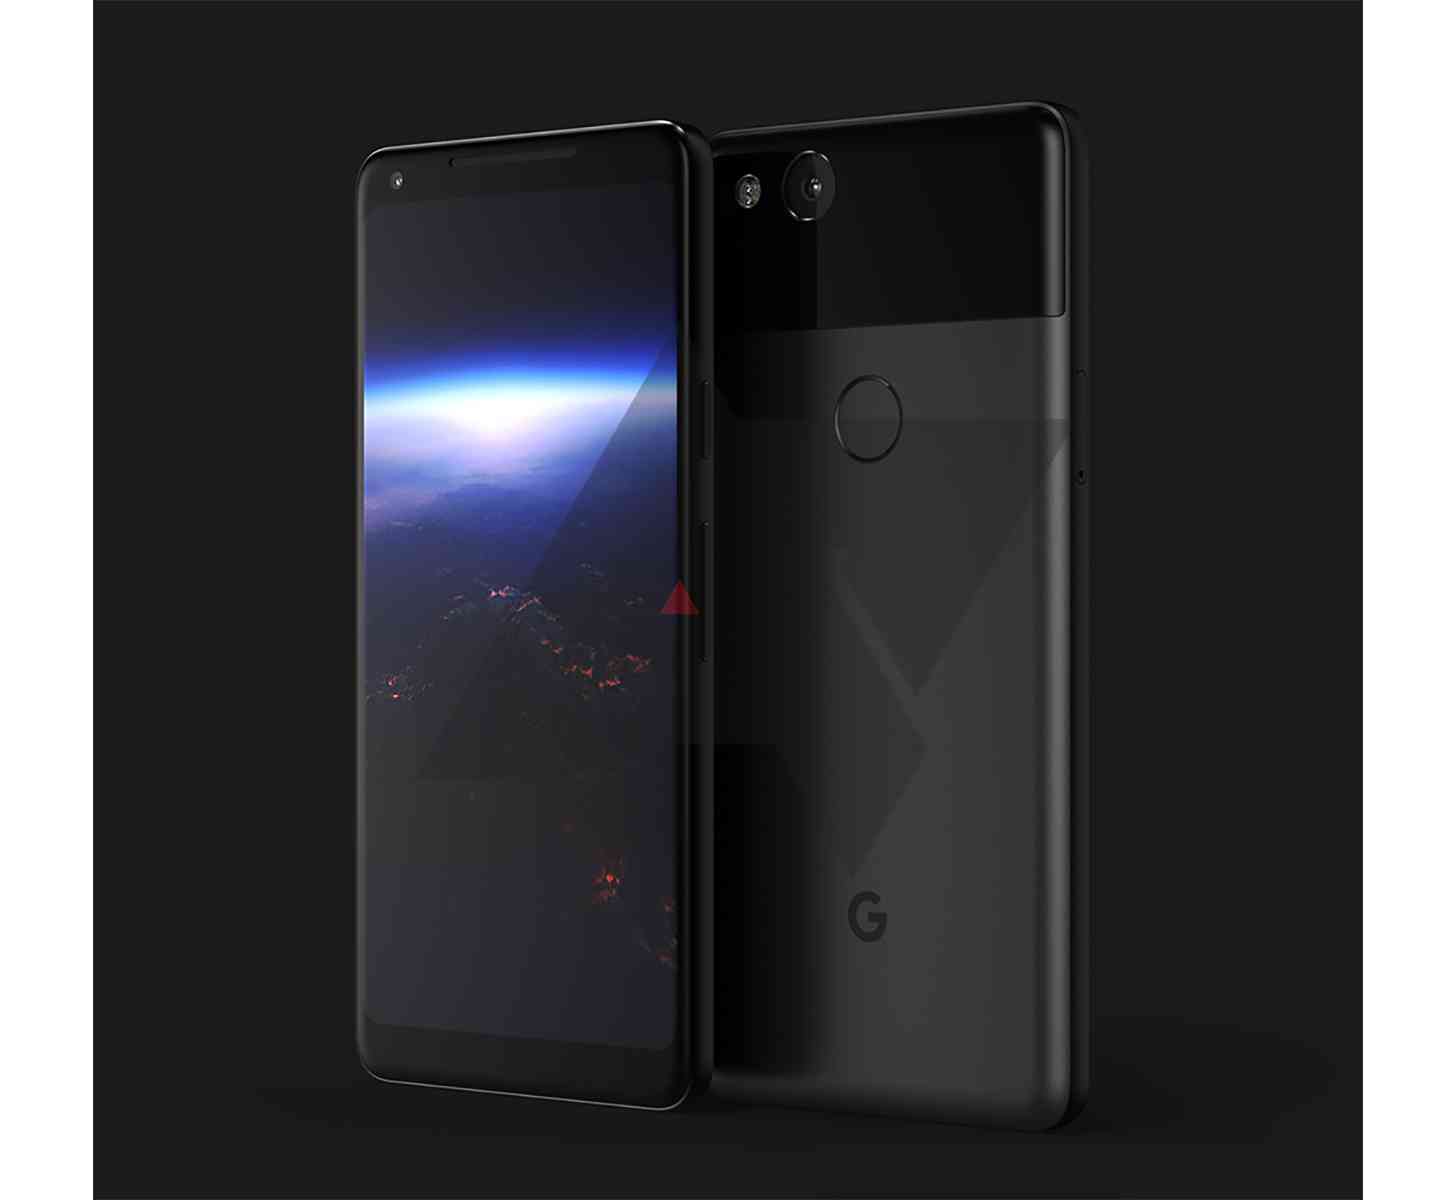 Google Pixel XL 2 image leak